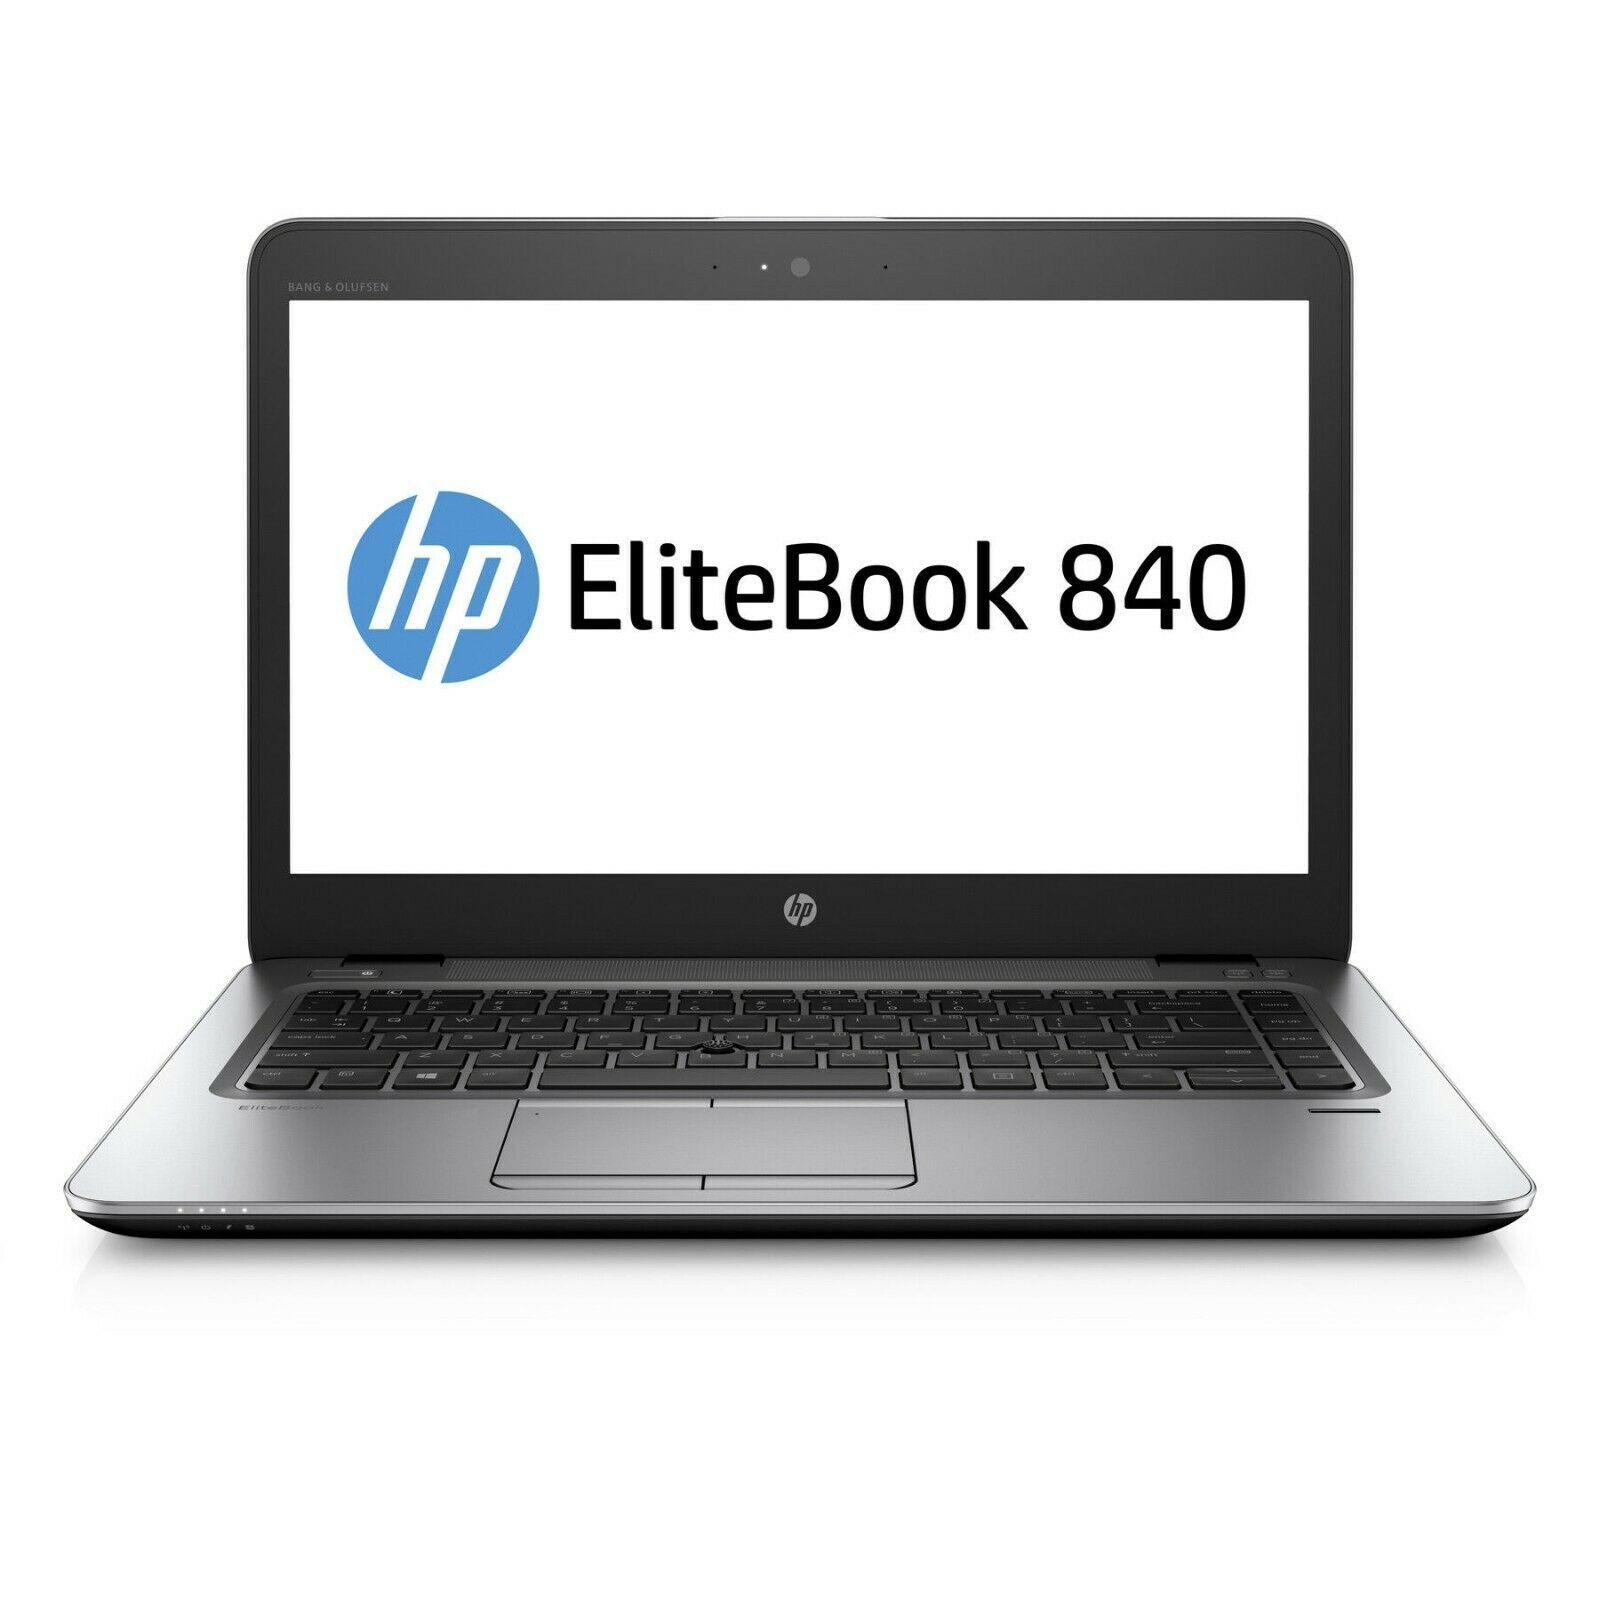 HP EliteBook 840 G3 Intel i5 6300U 2.40GHz 4GB RAM 512GB SSD 14" Win 10 Image 1